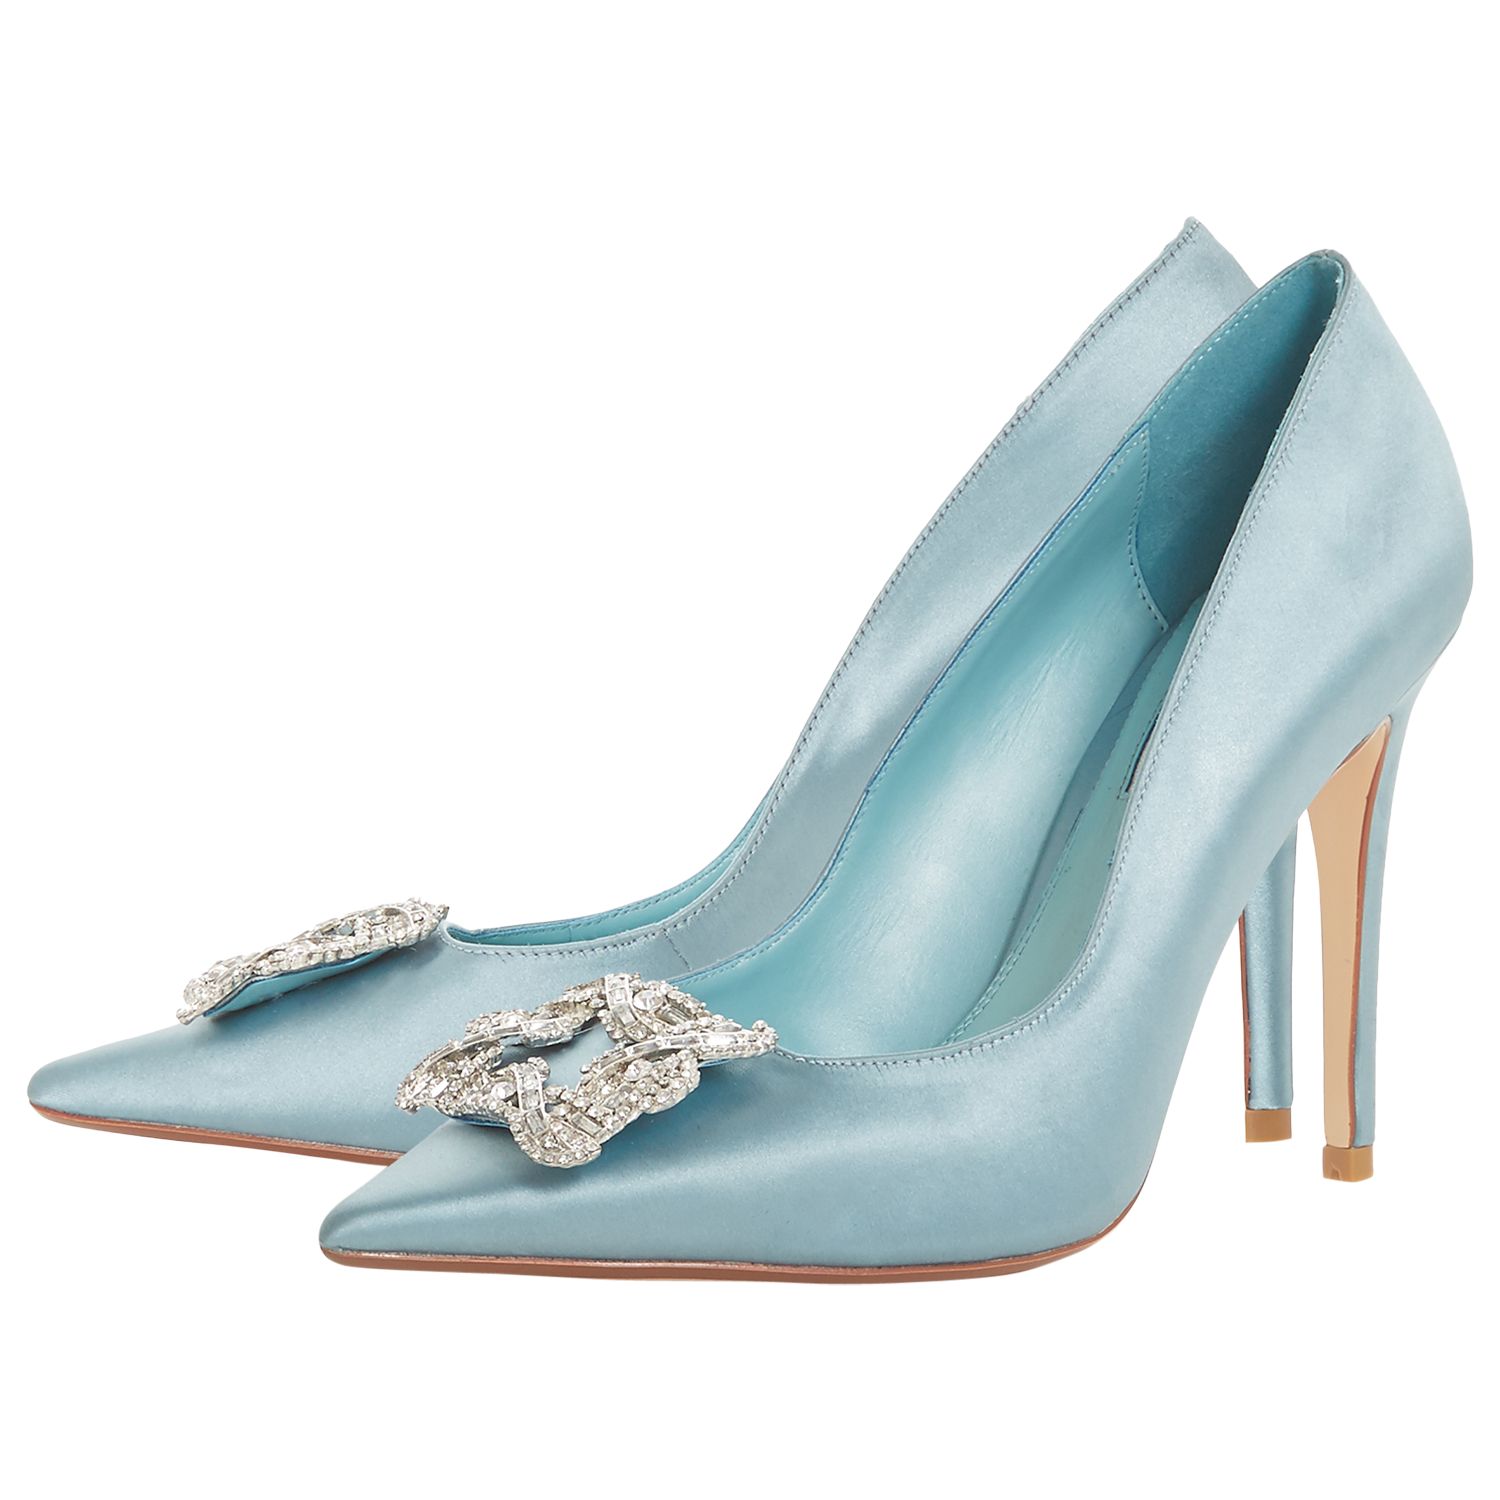 Dune Bridal Collection Breanna Jewel Stiletto Court Shoes, Light Blue Satin